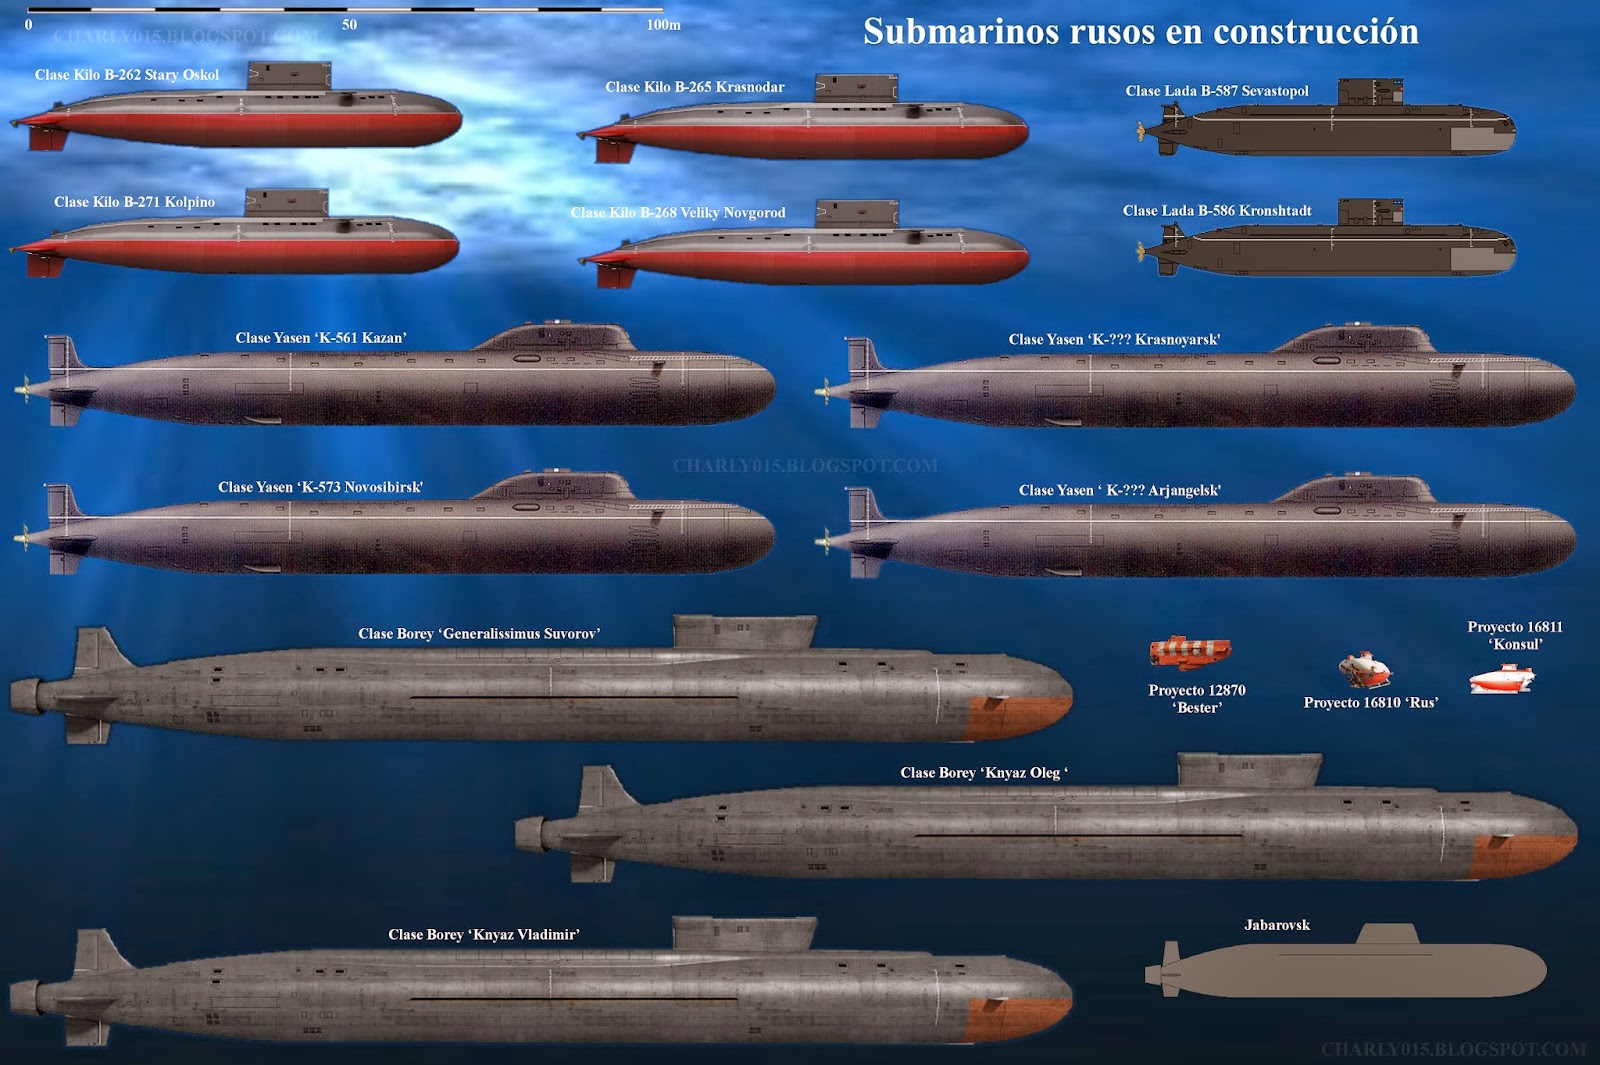 http://4.bp.blogspot.com/-tMb61C54iTs/VQRSylugVDI/AAAAAAAAIQA/QGW-A7sM3CM/s1600/submarinos%2Brusos%2Ben%2Bconstrucci%C3%B3n.jpg